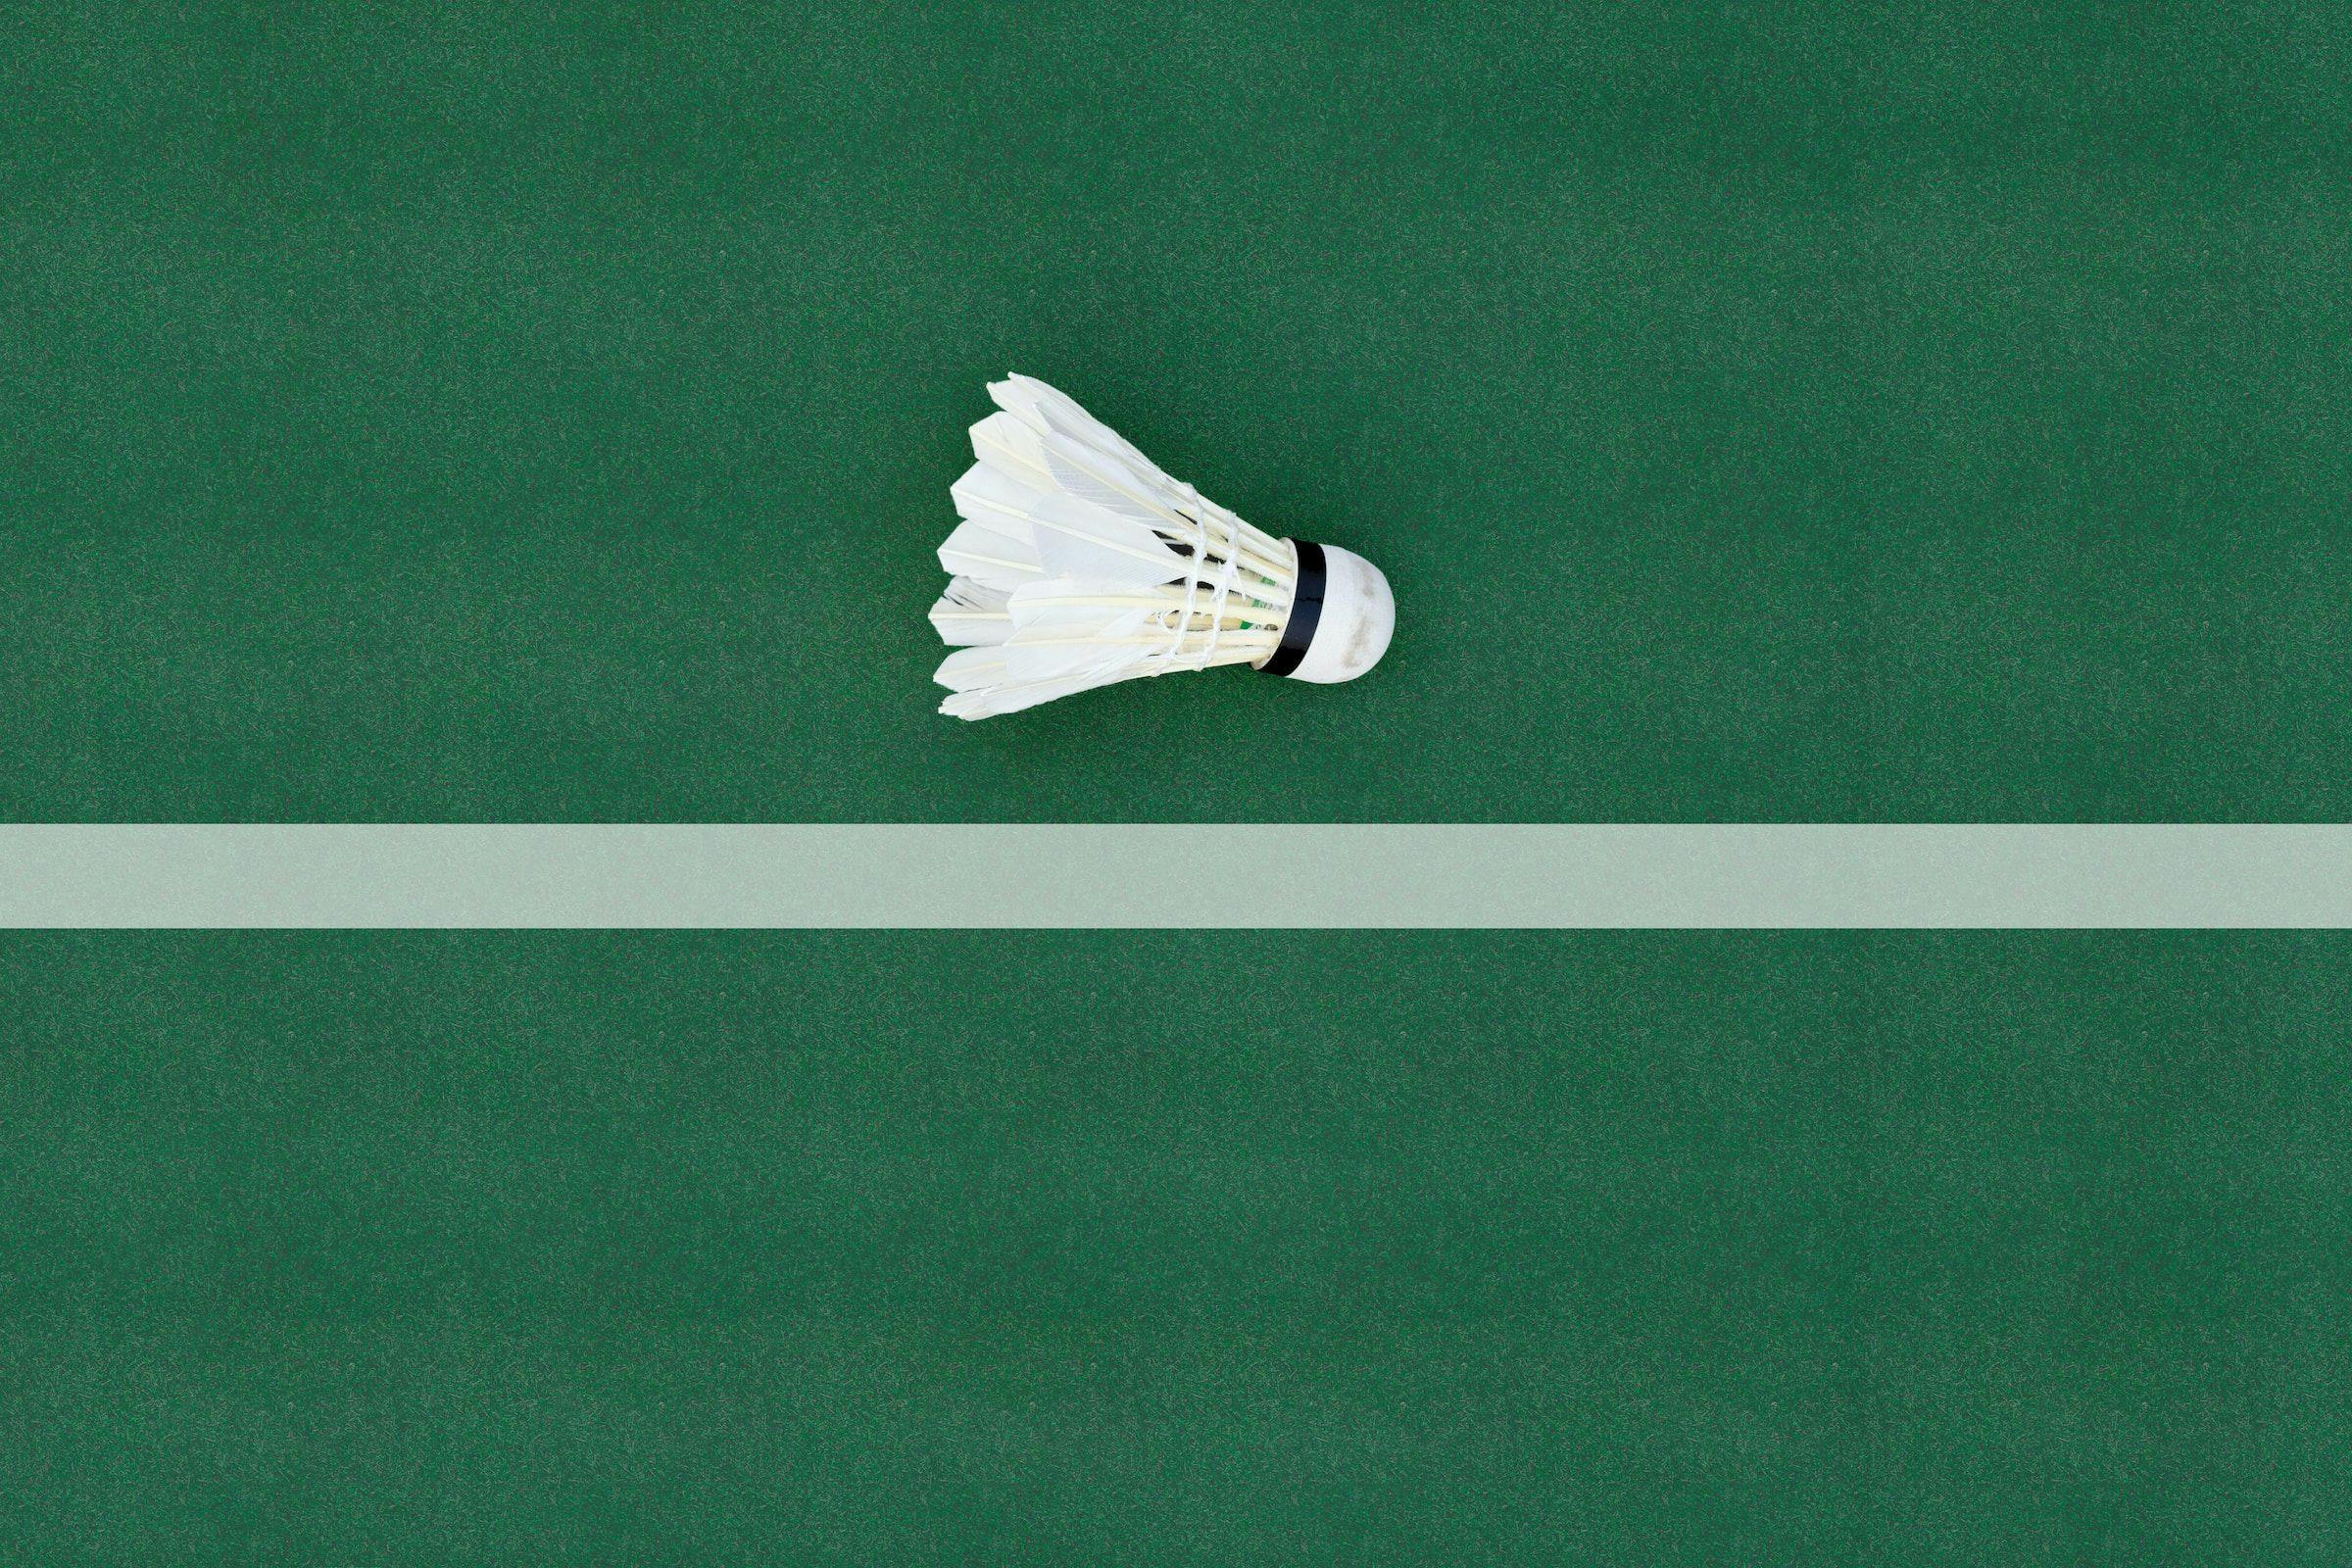 A badminton shuttlecock on the ground